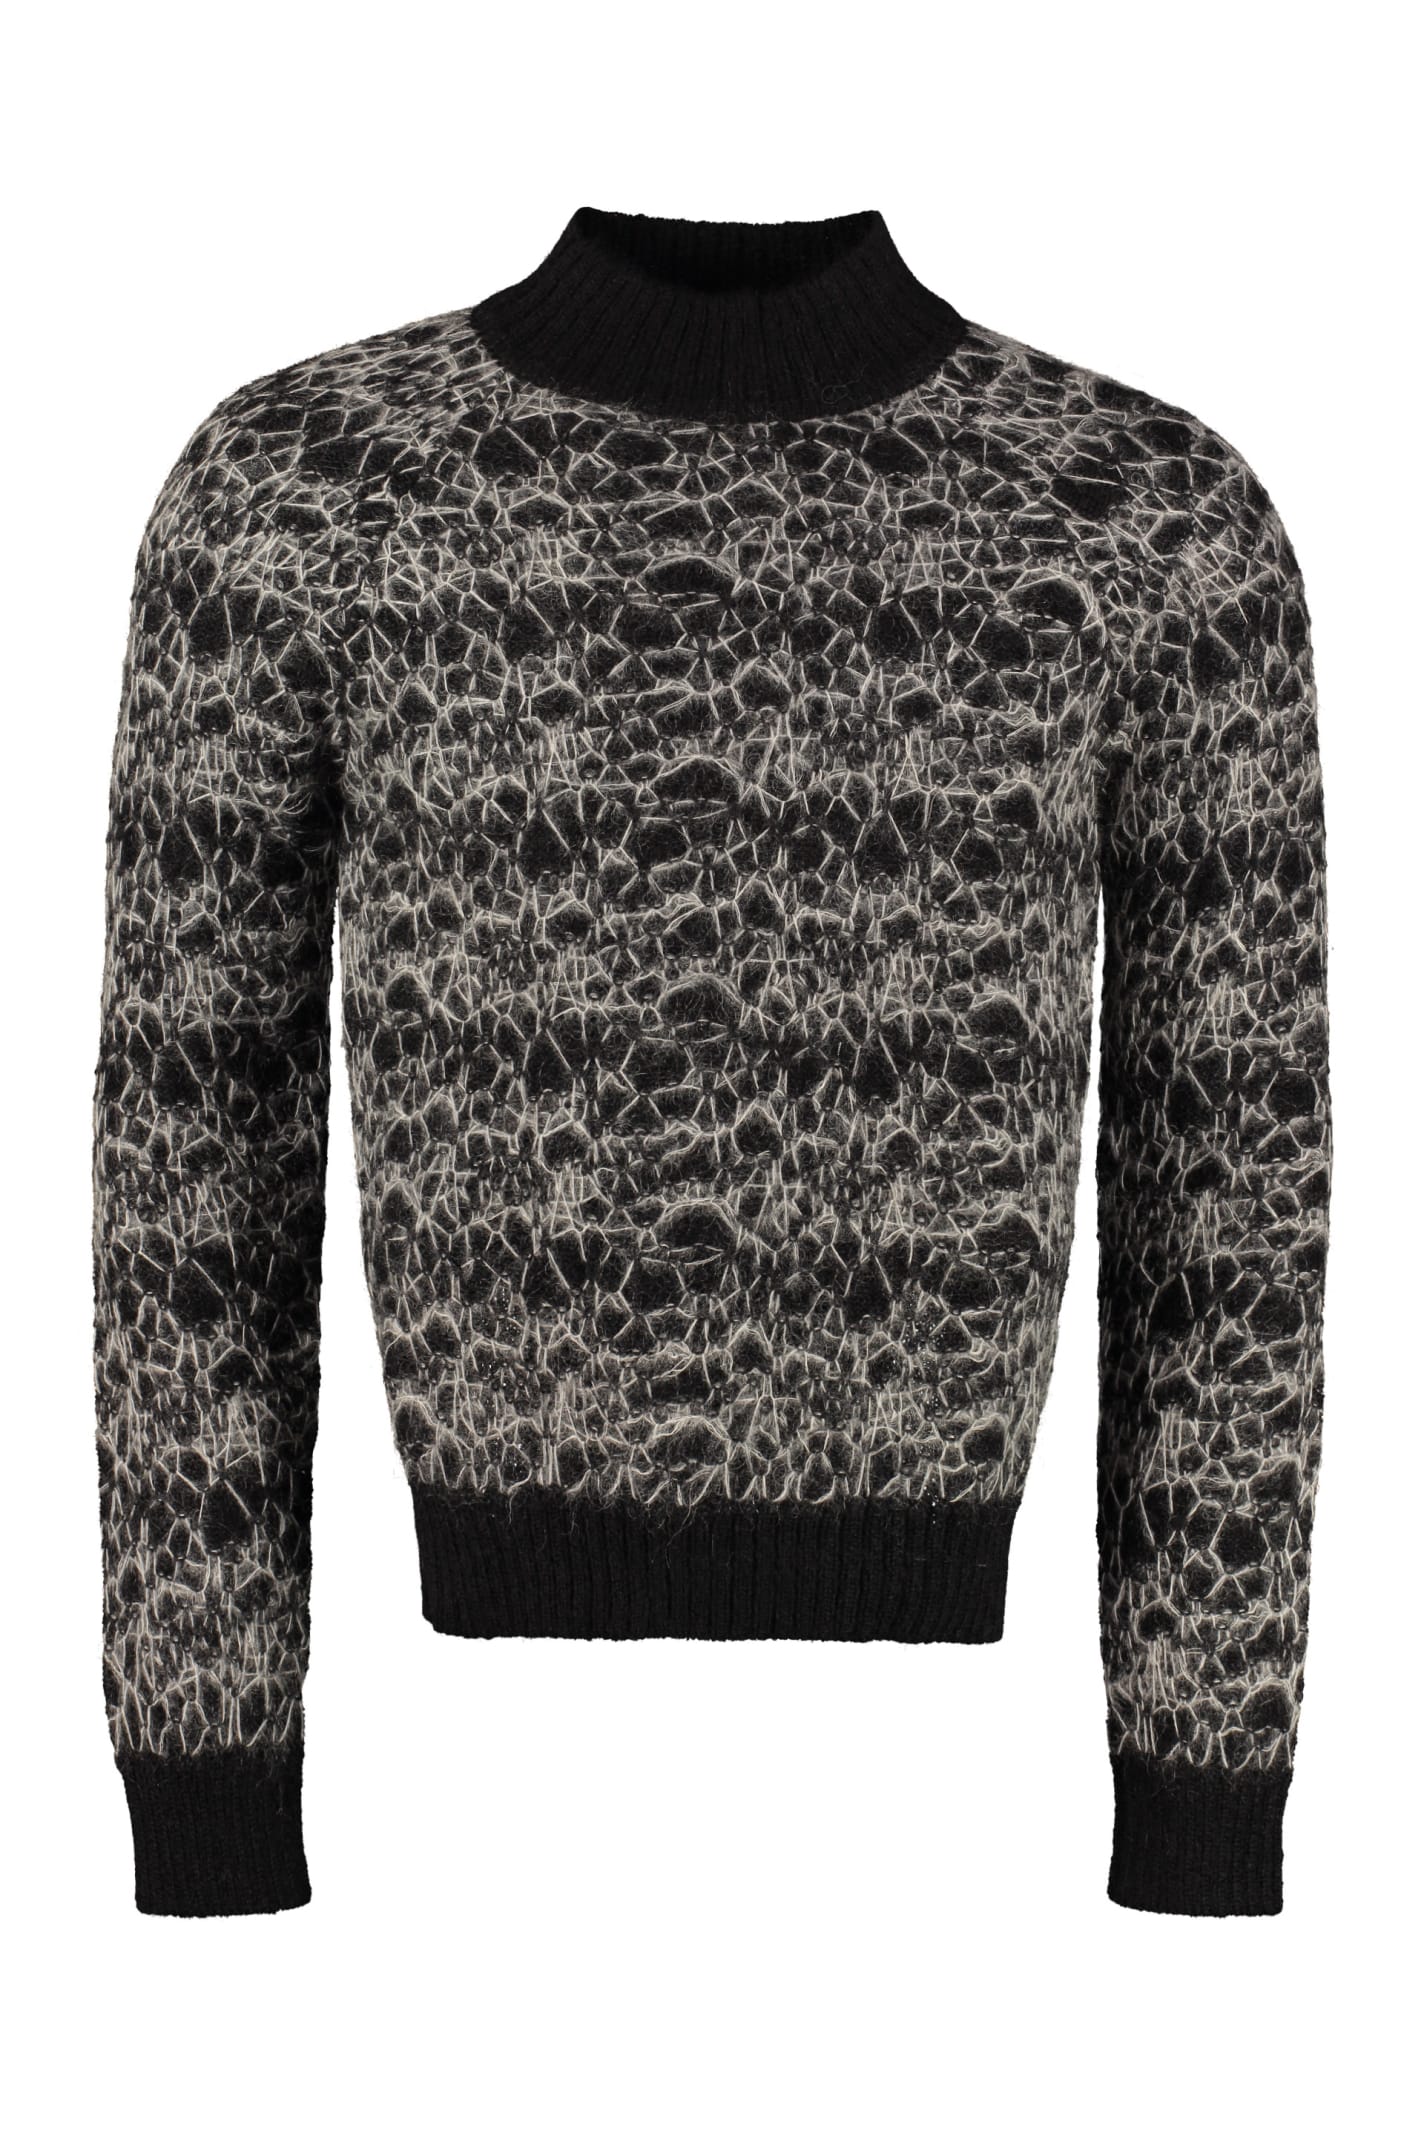 Saint Laurent Long Sleeve Sweater